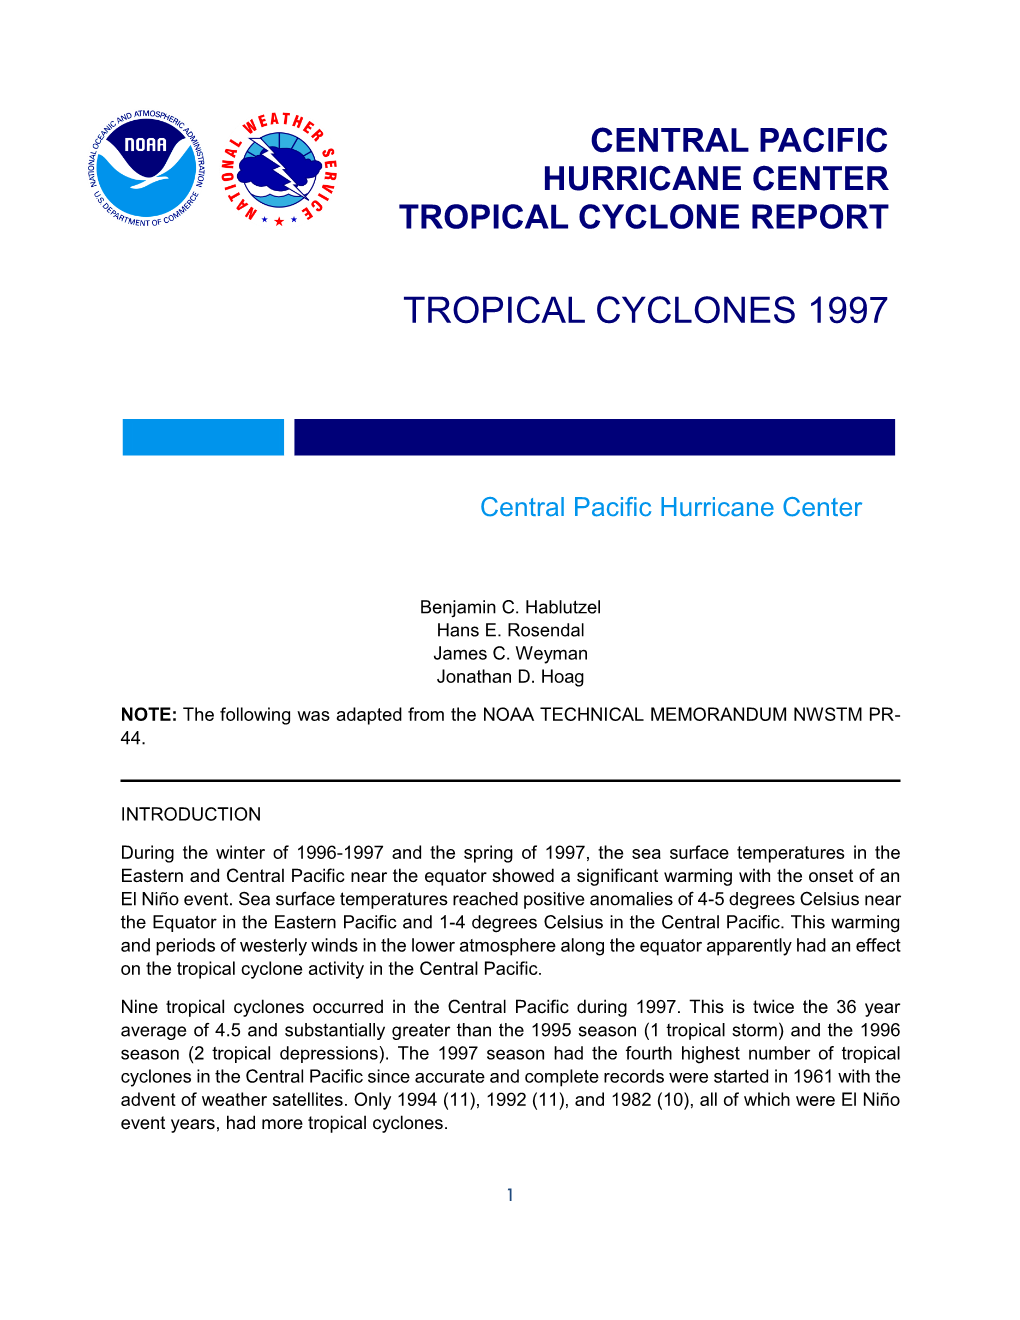 Tropical Cyclones 1997